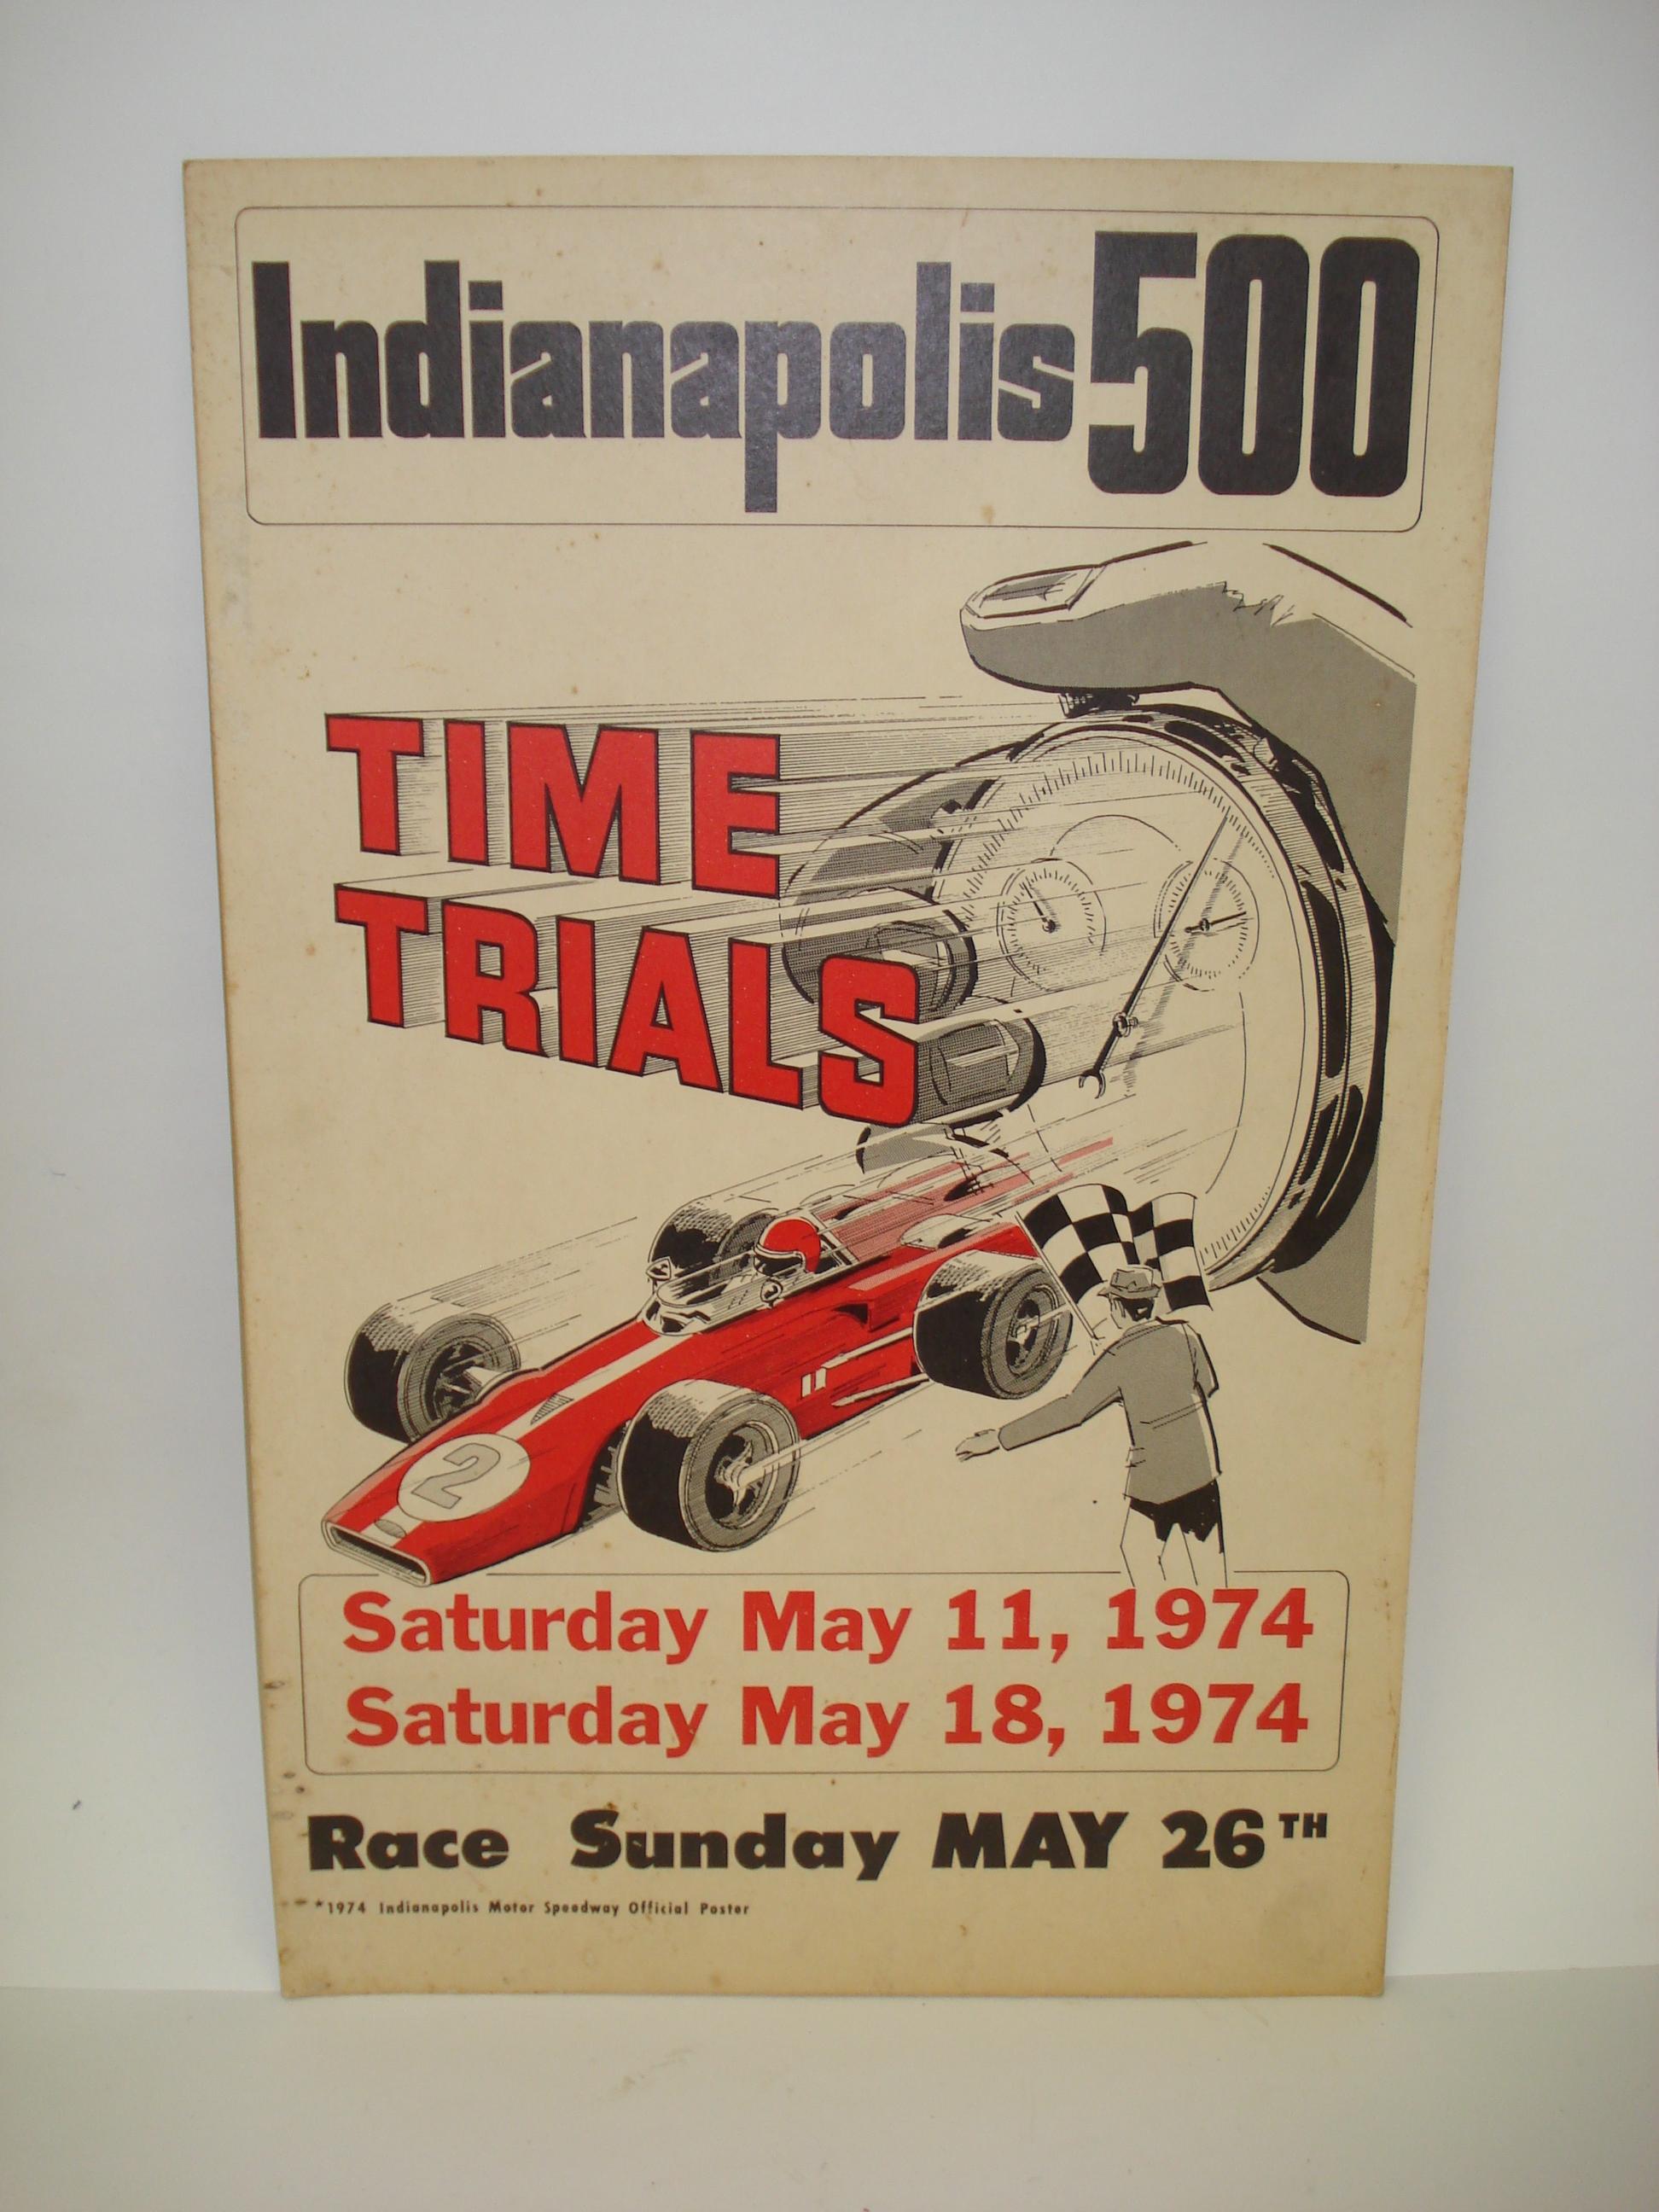 Bonhams An Indianapolis 500 Time Trial poster, 1974,